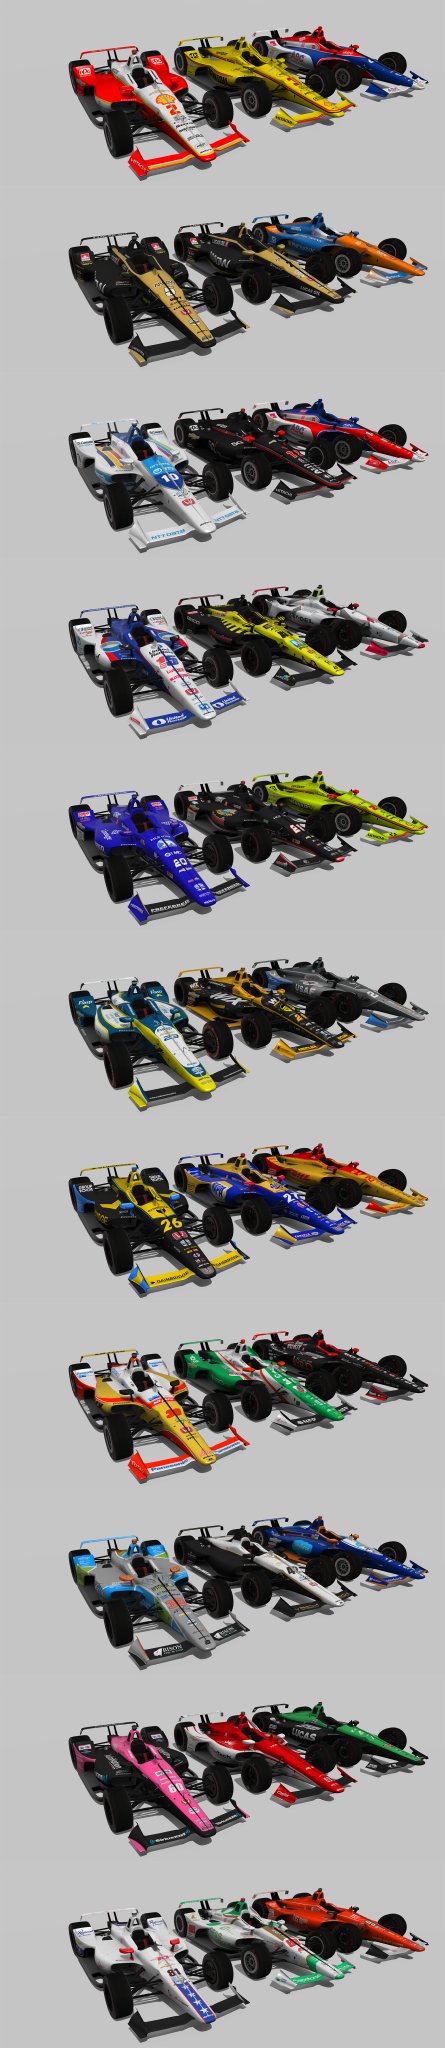 2019 Indy 500 grid.jpg